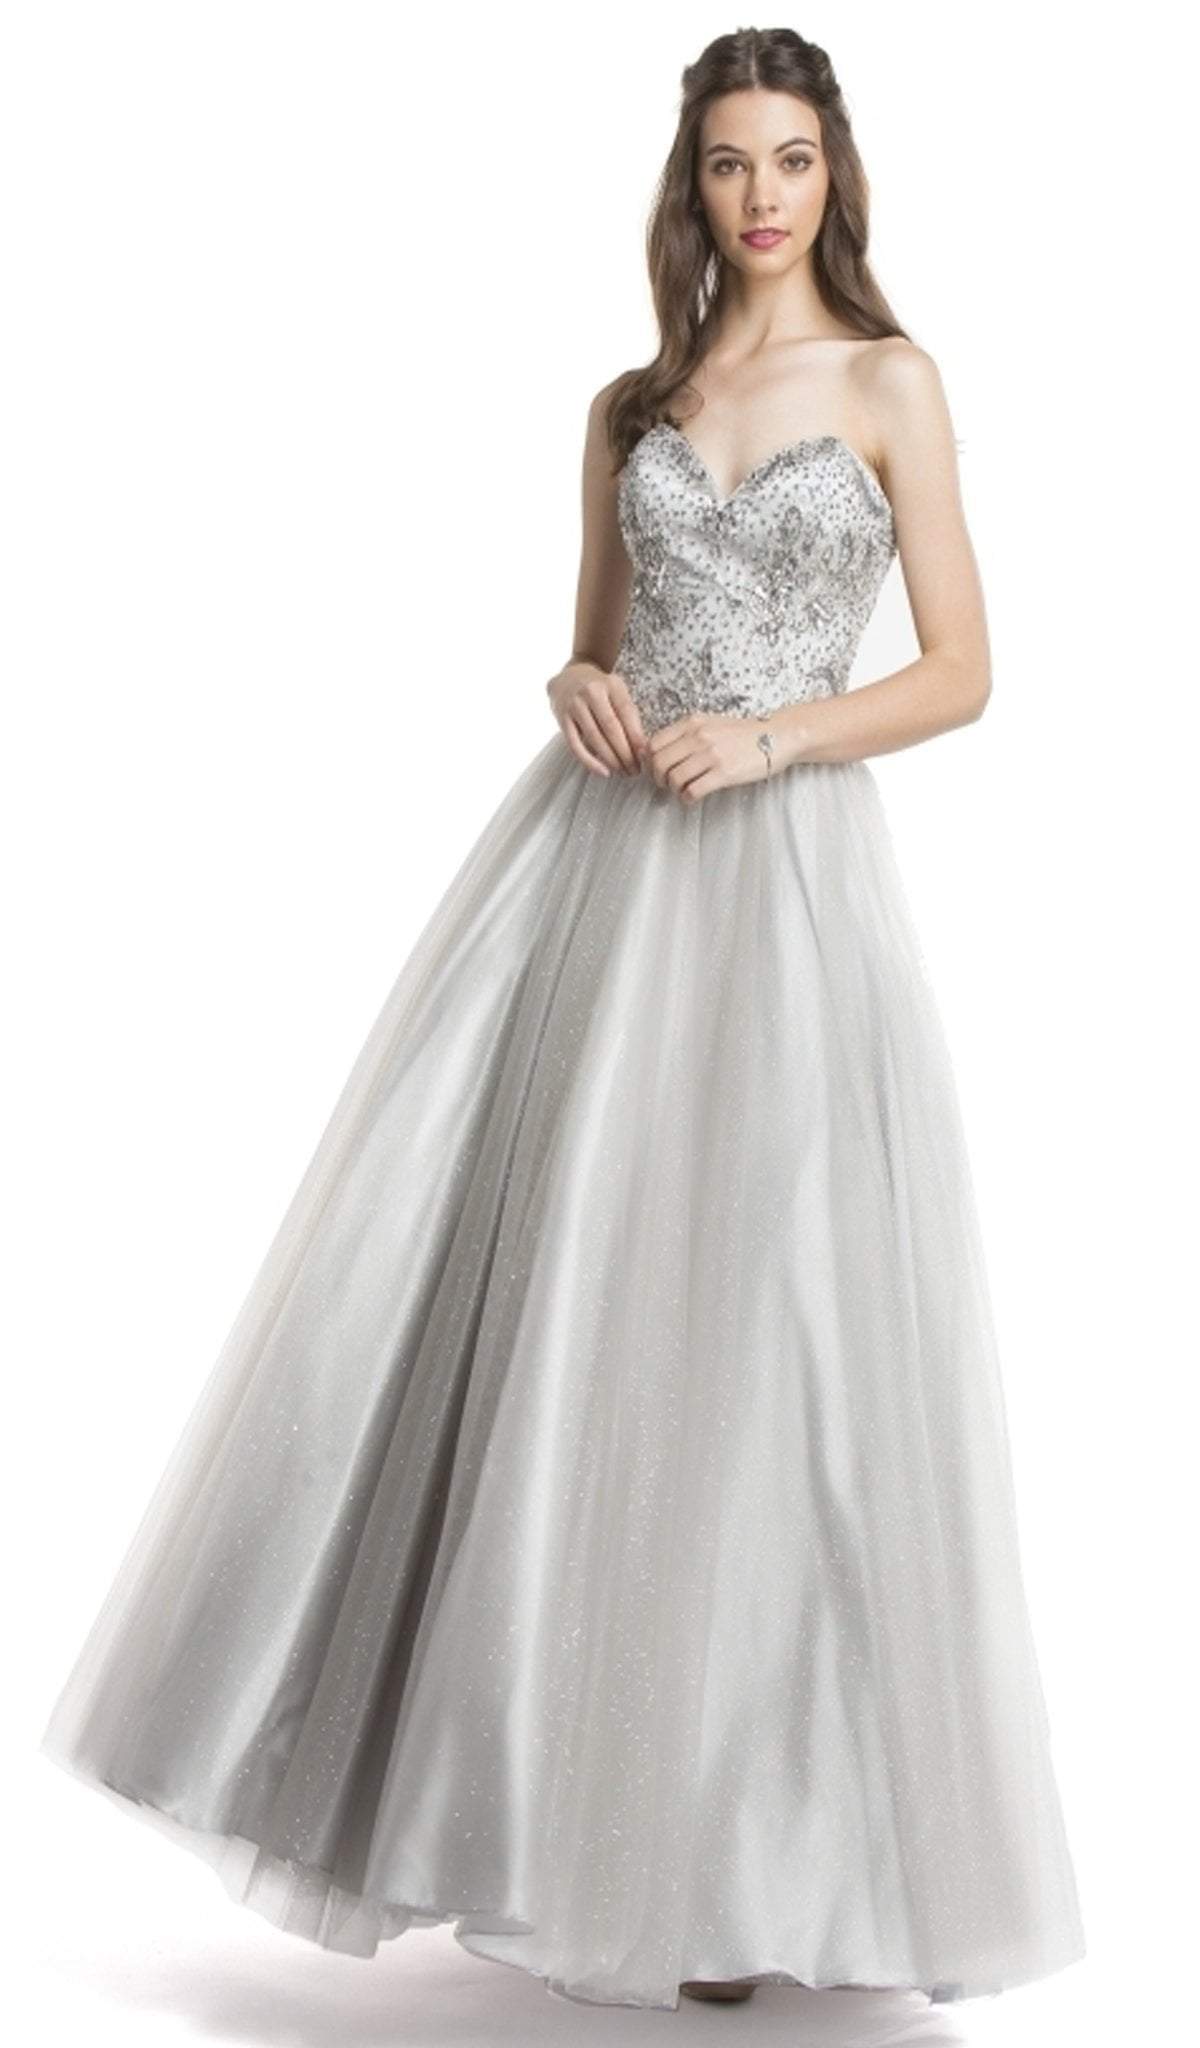 Aspeed Design - Embellished Sweetheart Neckline Evening Gown
